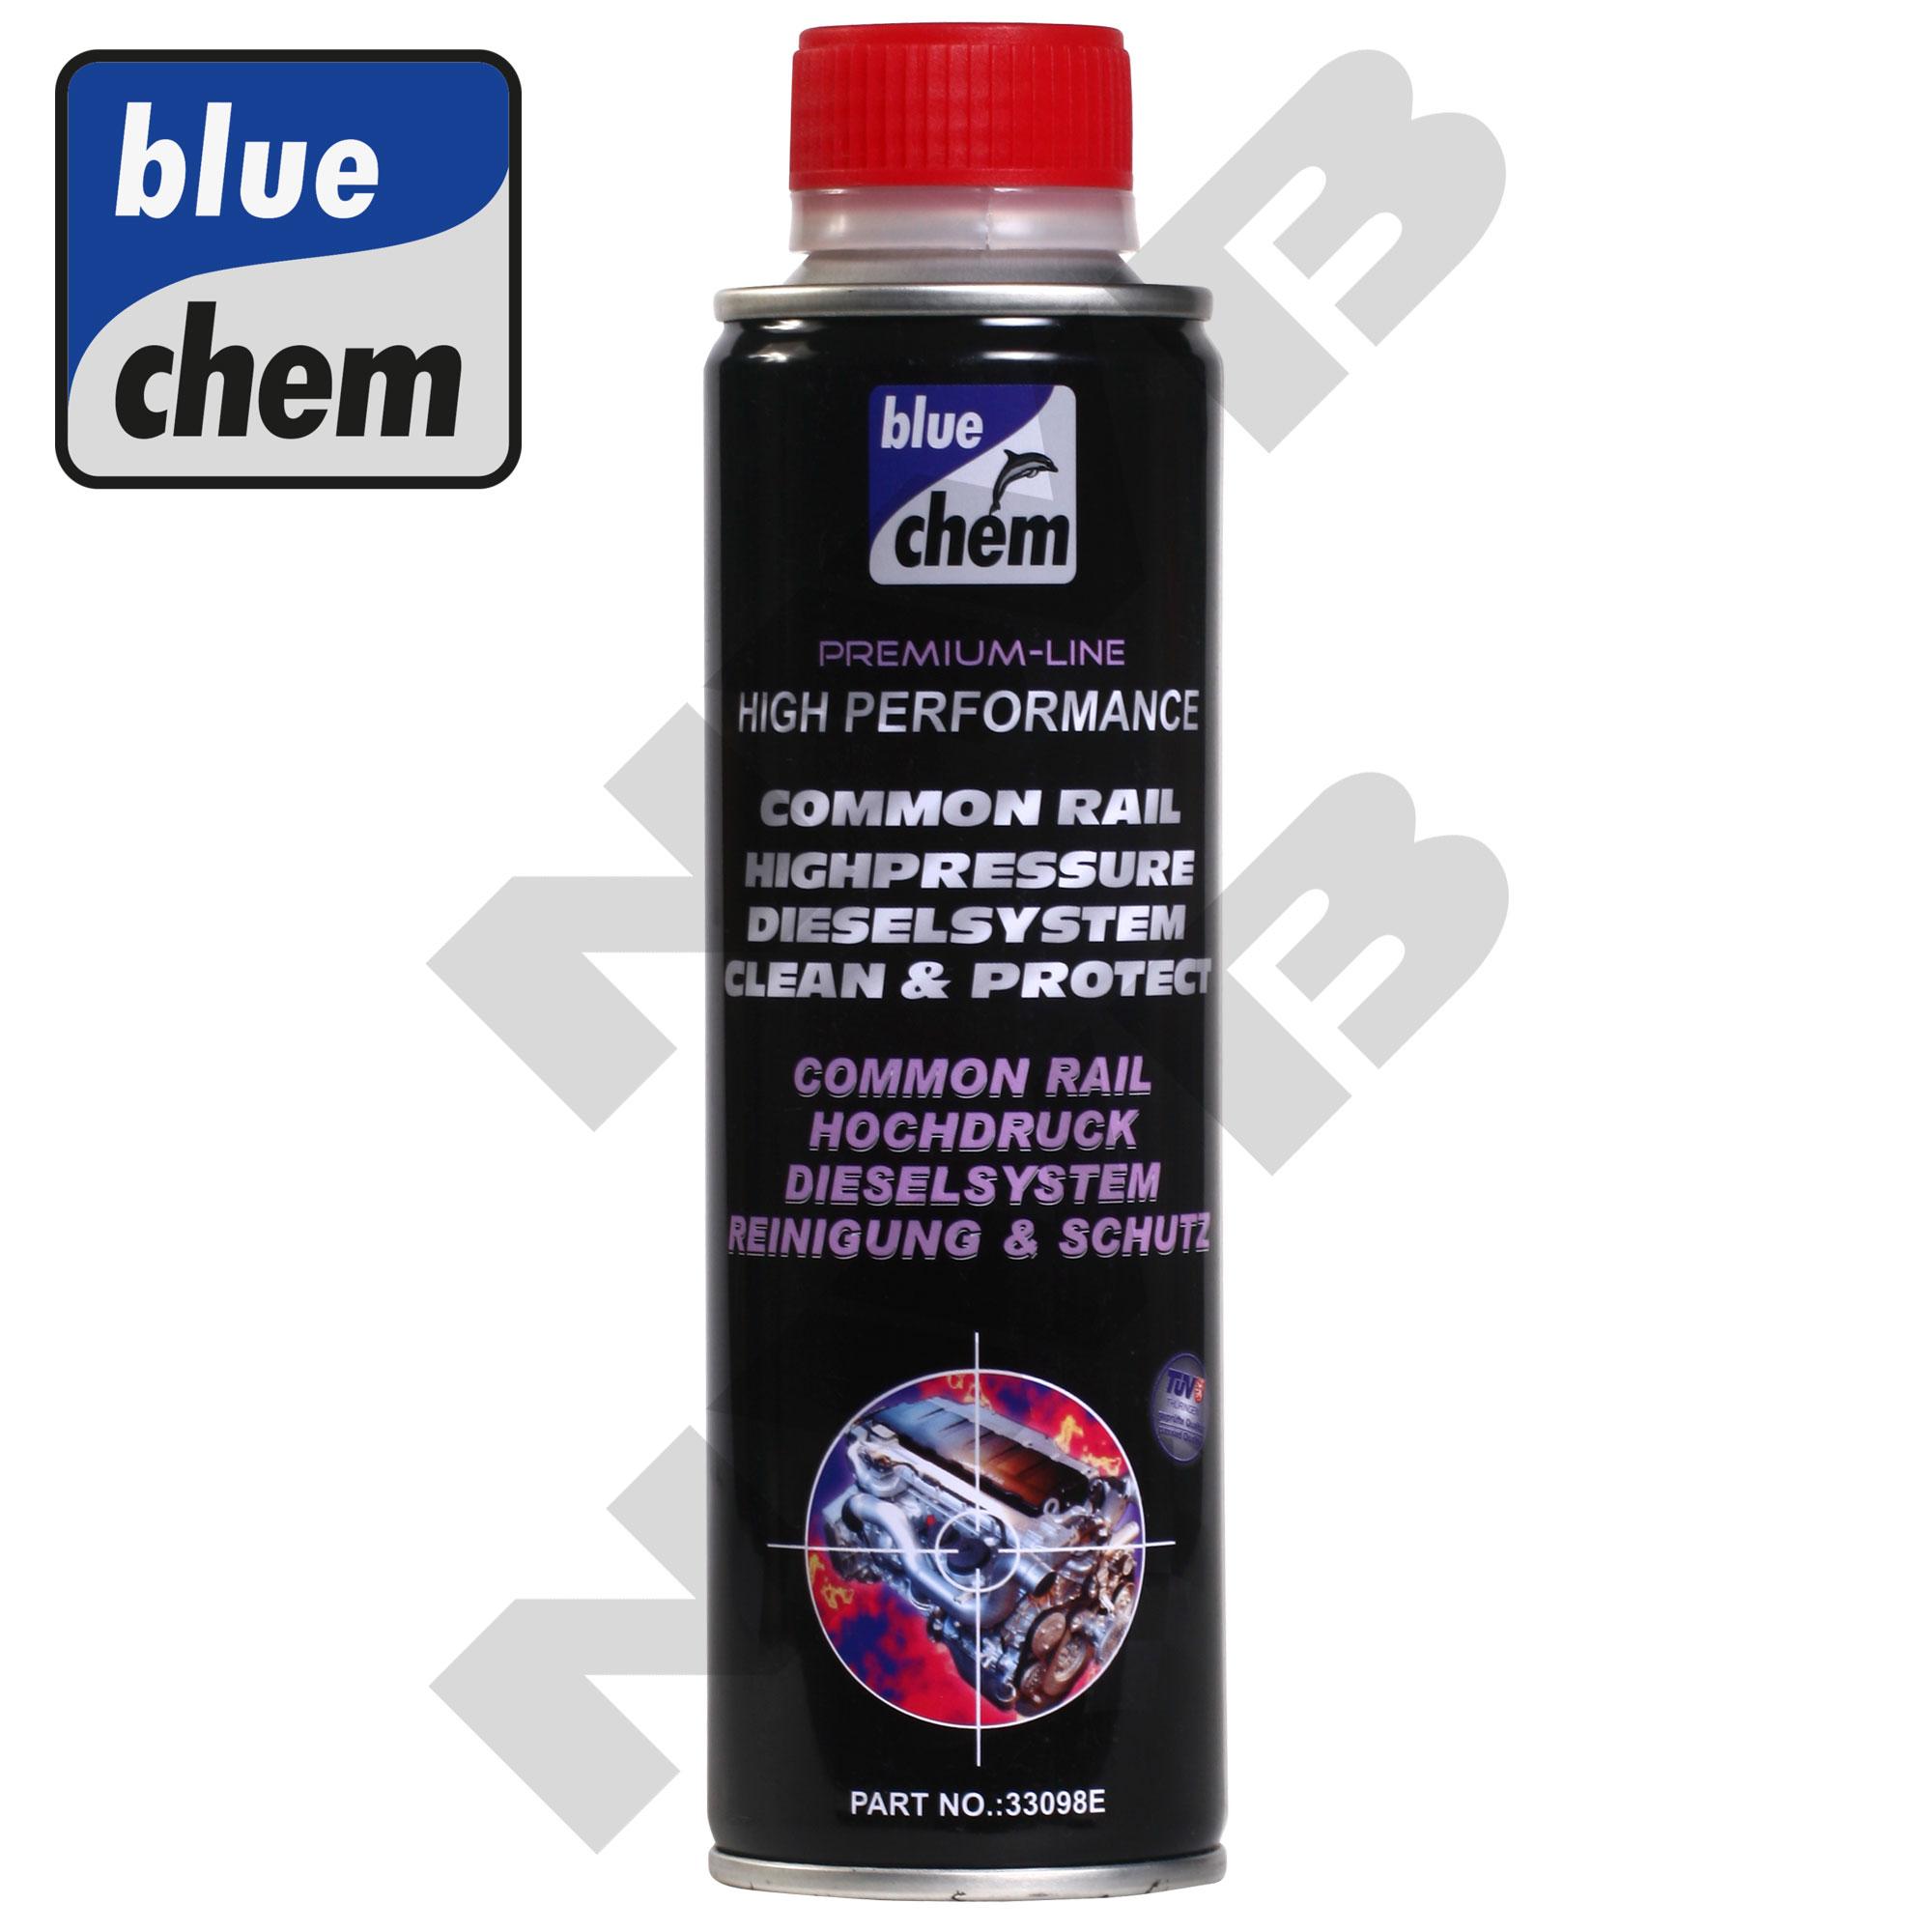 Bluechem Diesel System Cleaner & Protect